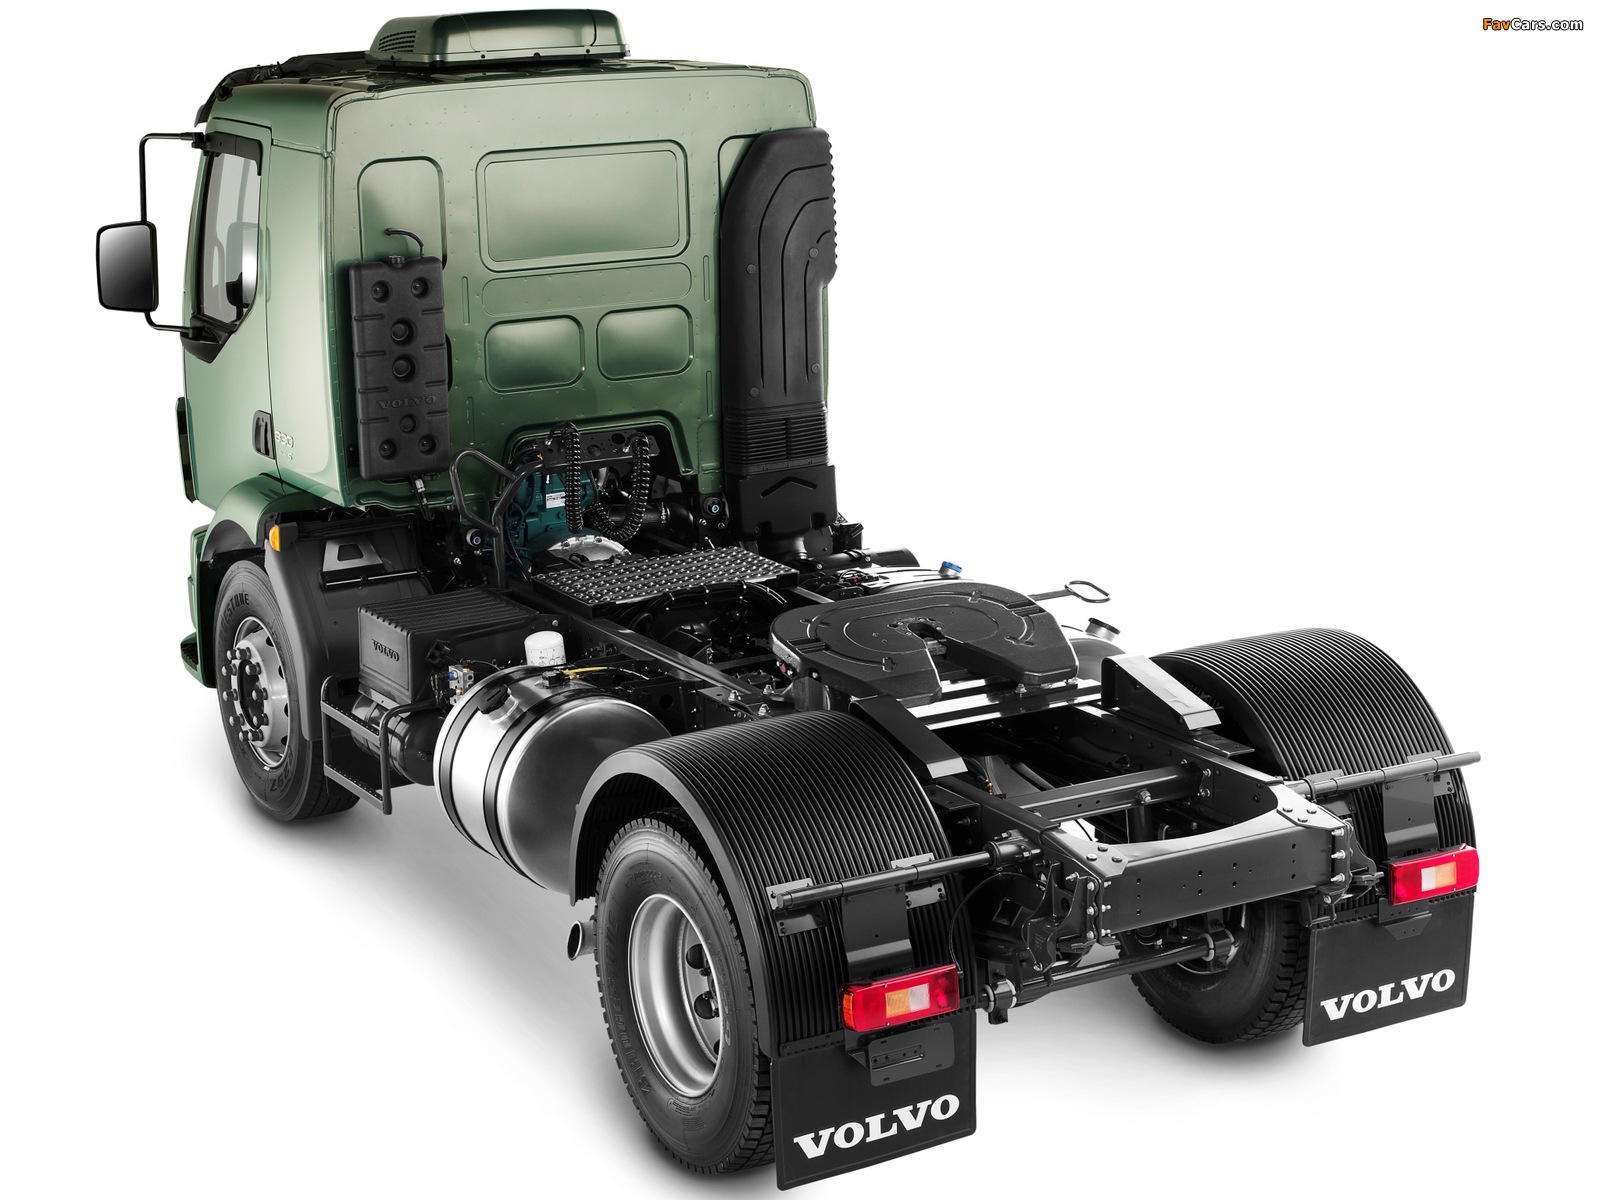 Volvo VM 330 4x2 Tractor 2012 photos (1600 x 1200)